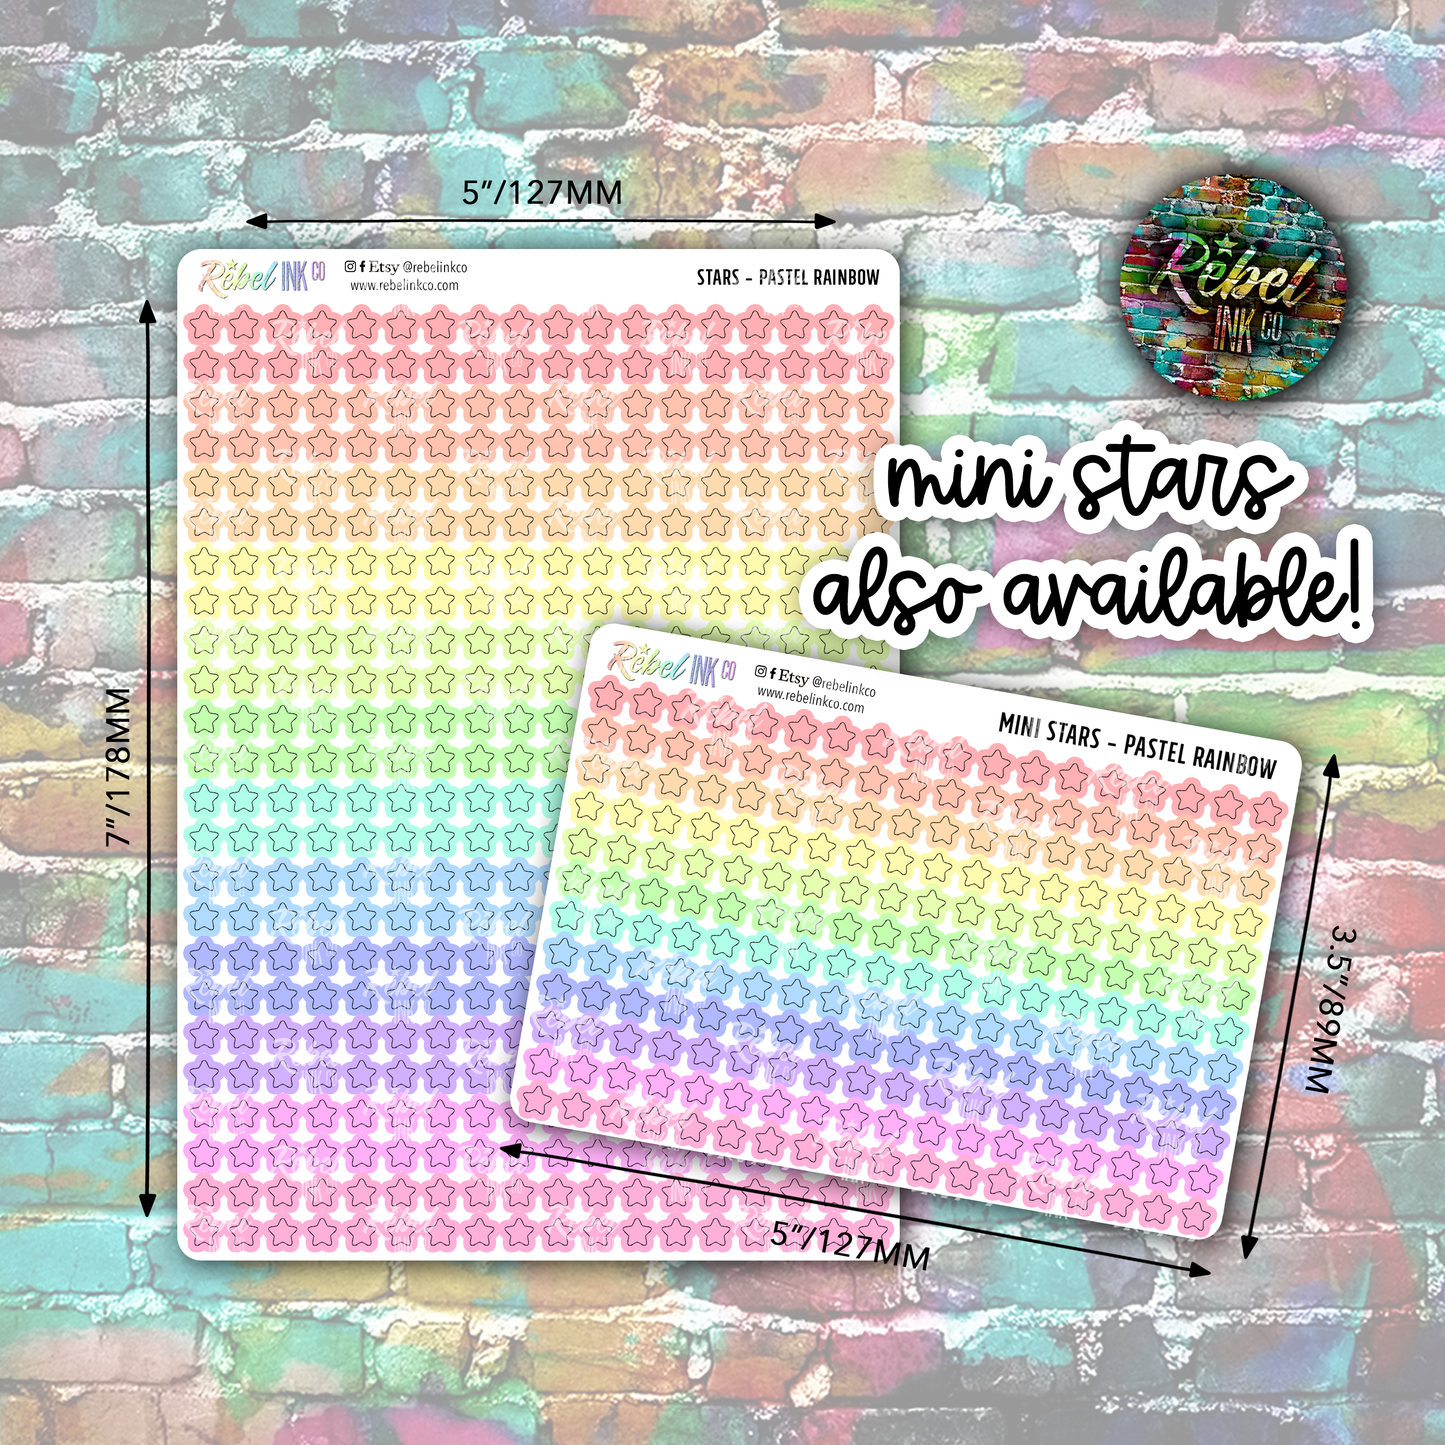 Star Stickers - Bright Rainbow